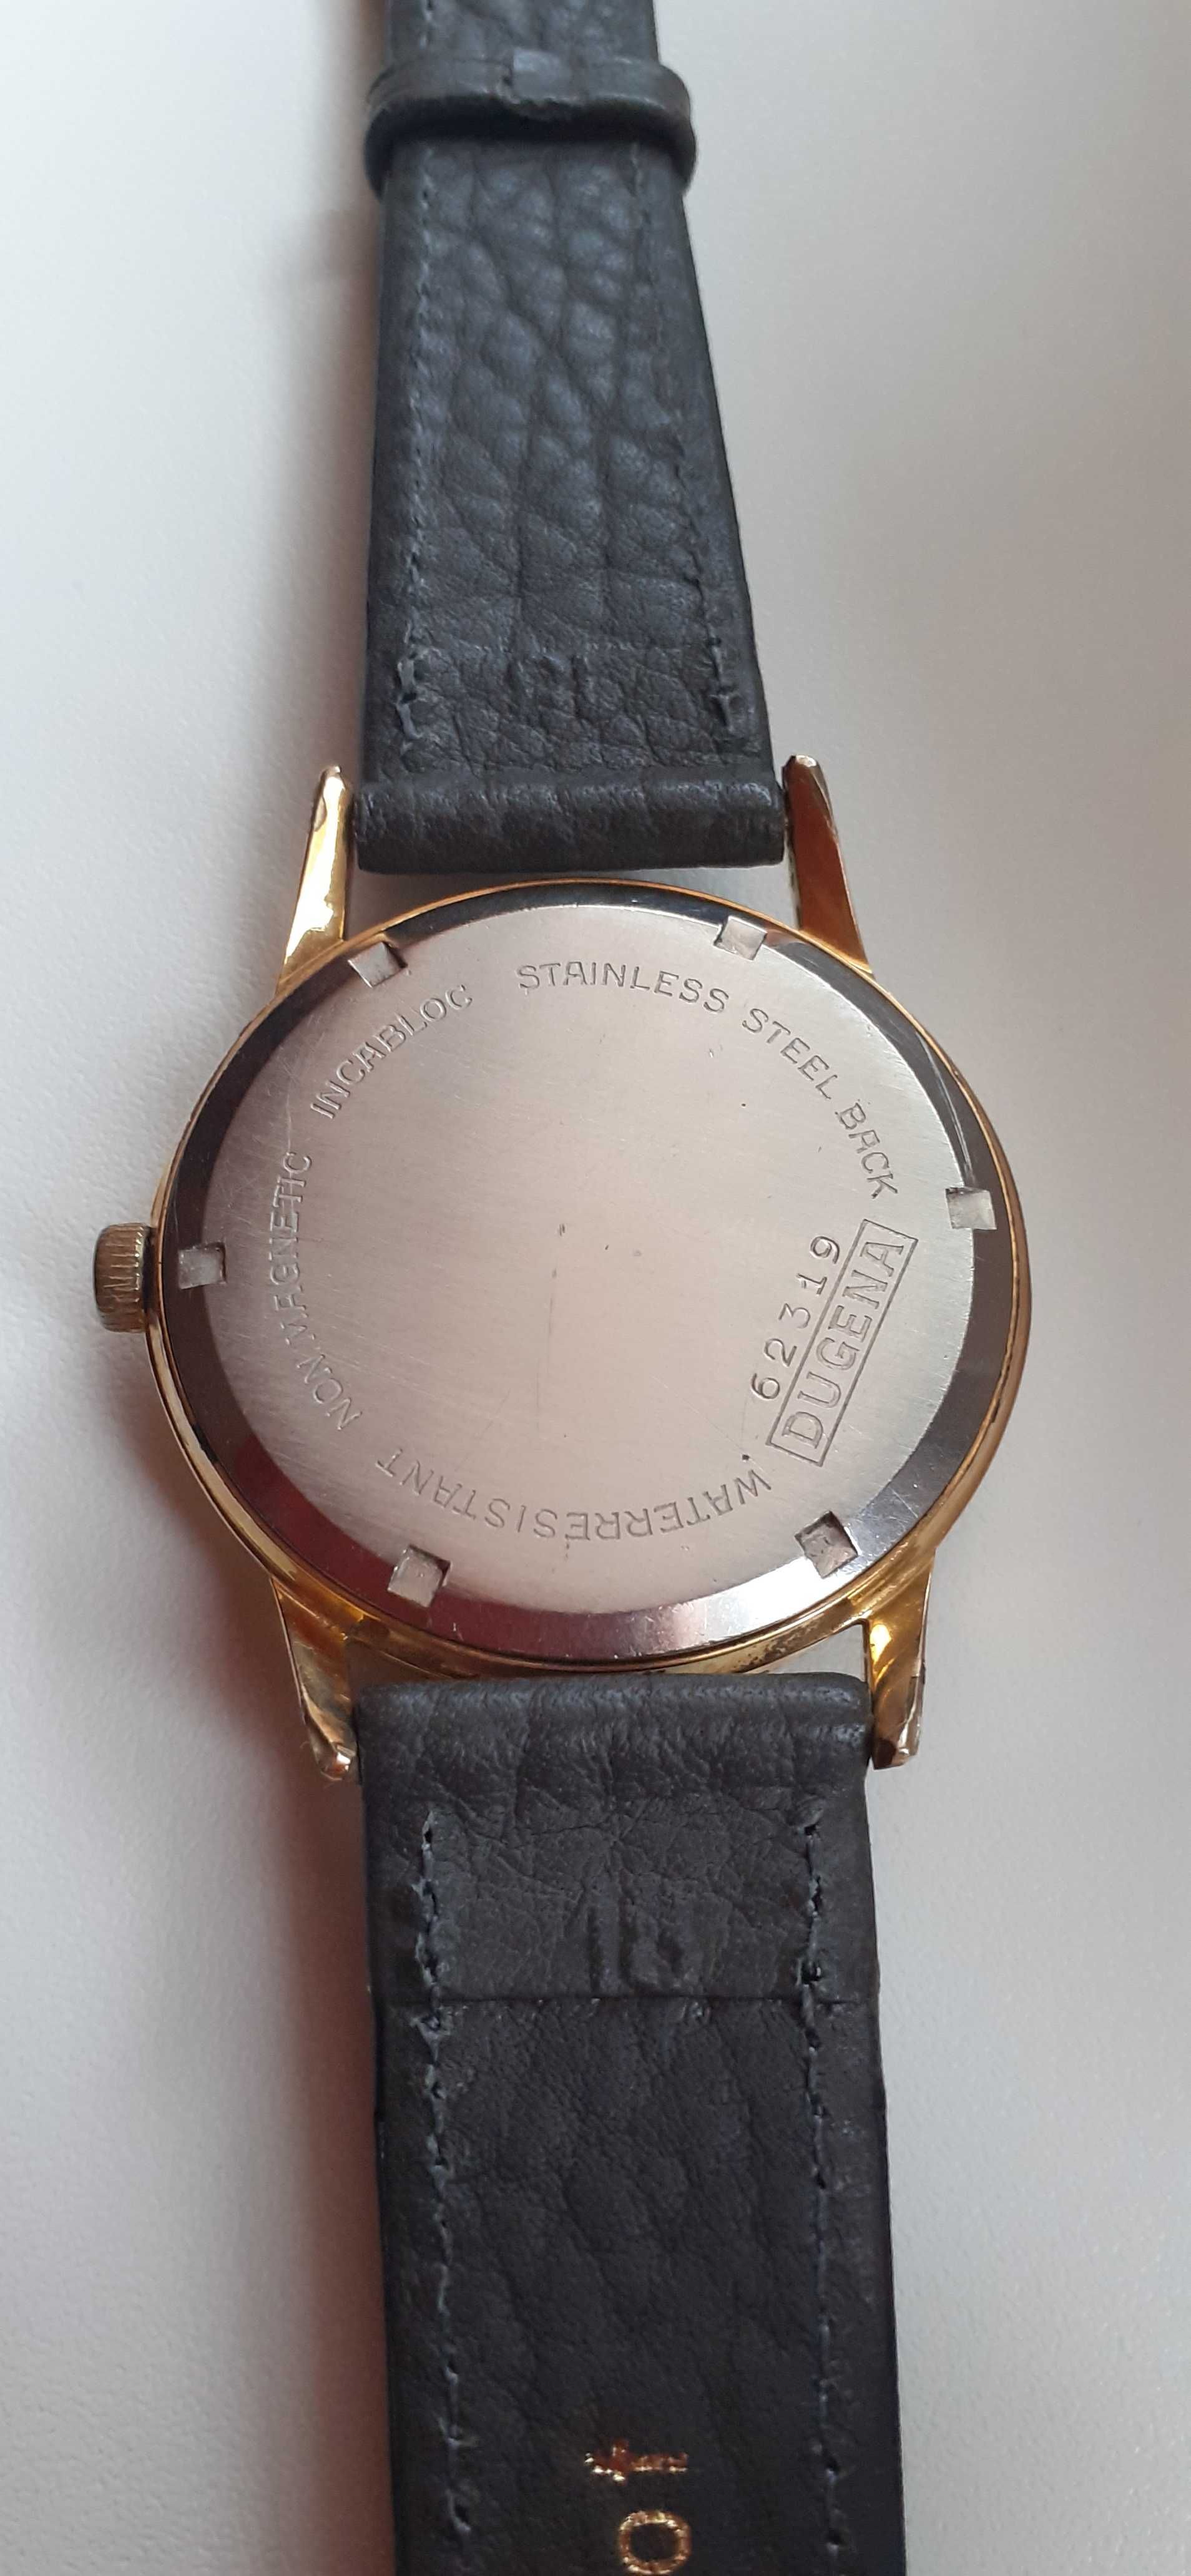 Zegarek Dugena Super 1000 A automatic 25 jewels pozłacana.